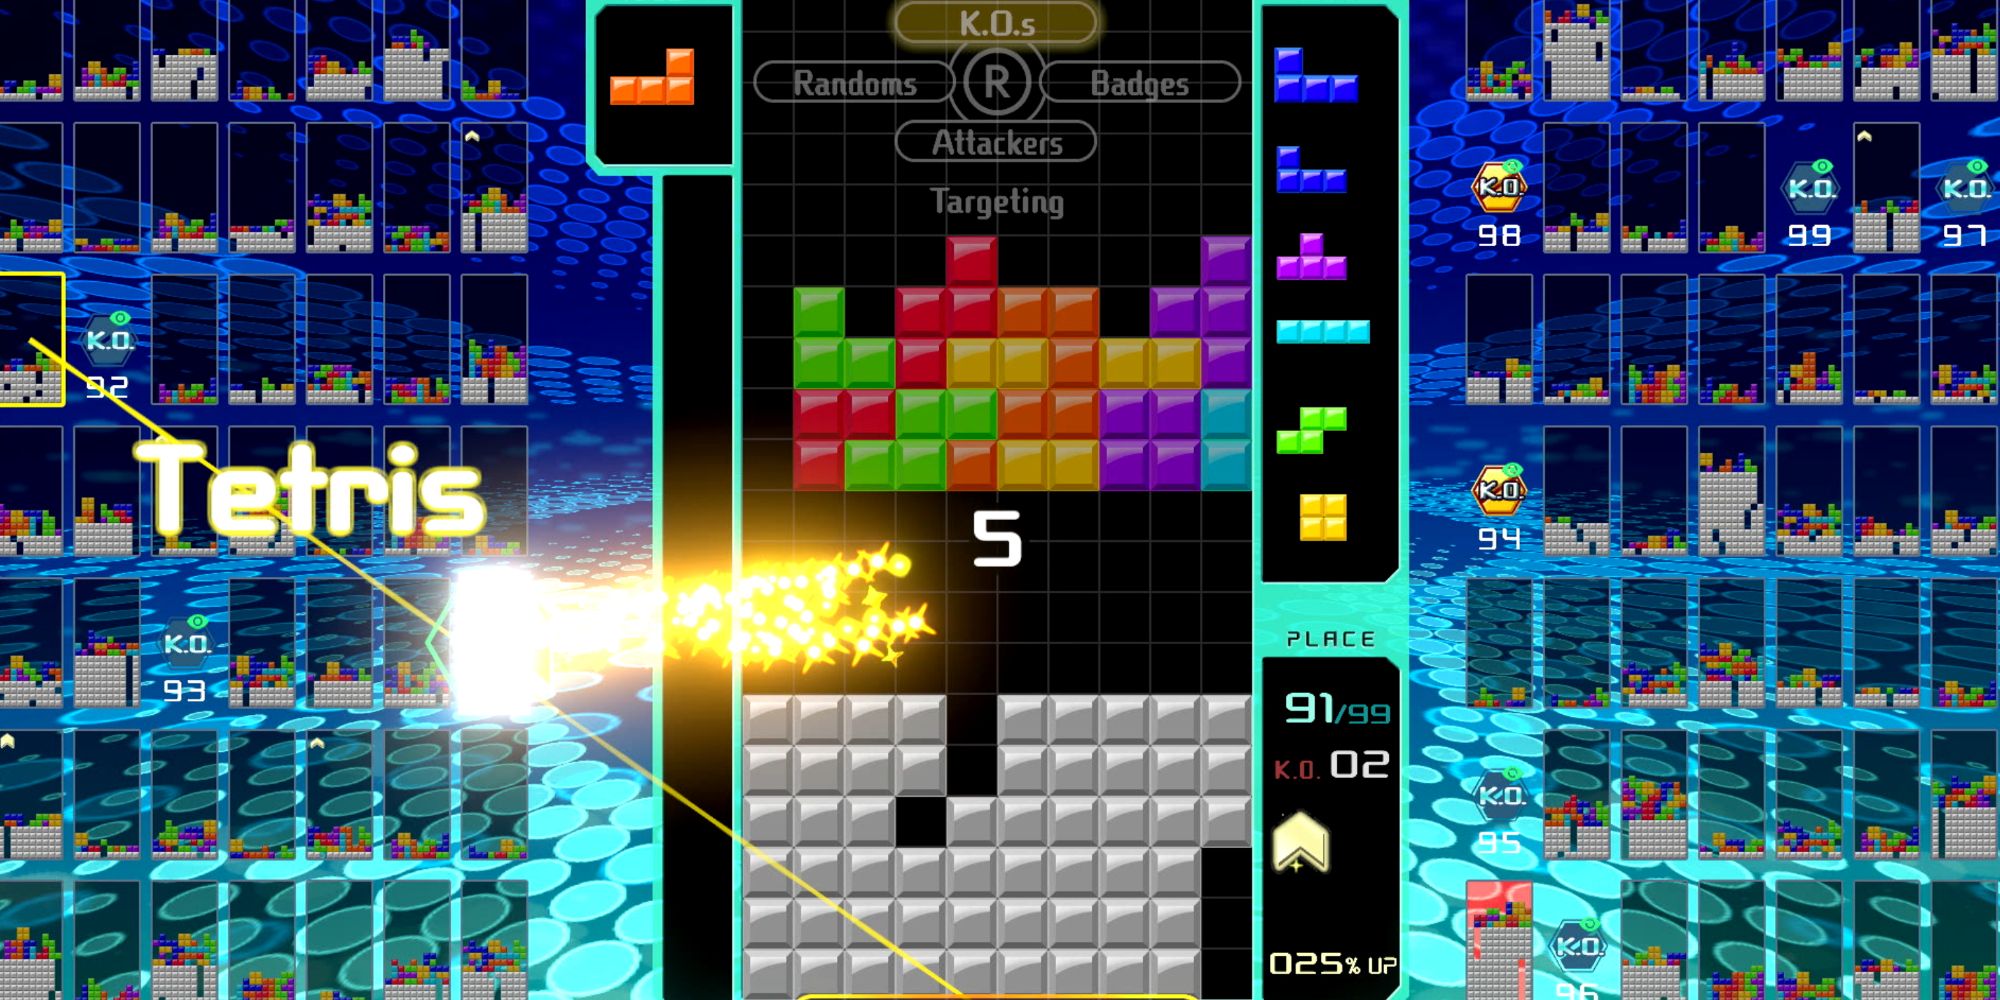 A match of Tetris 99 on Nintendo Switch Online